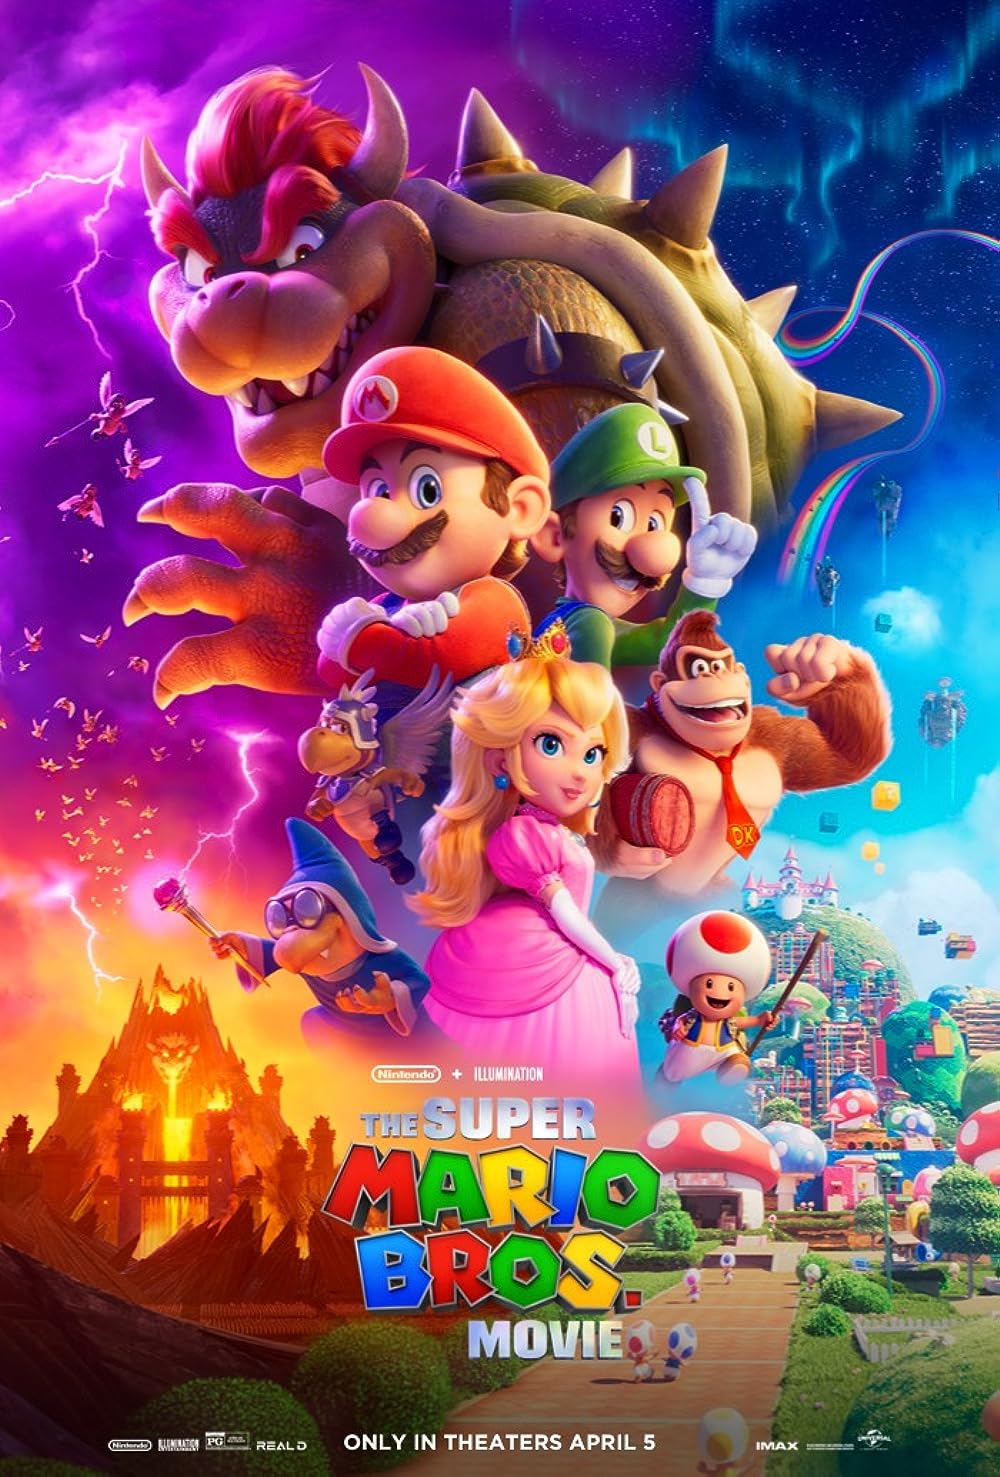 Image of Super Mario Bros movie poster